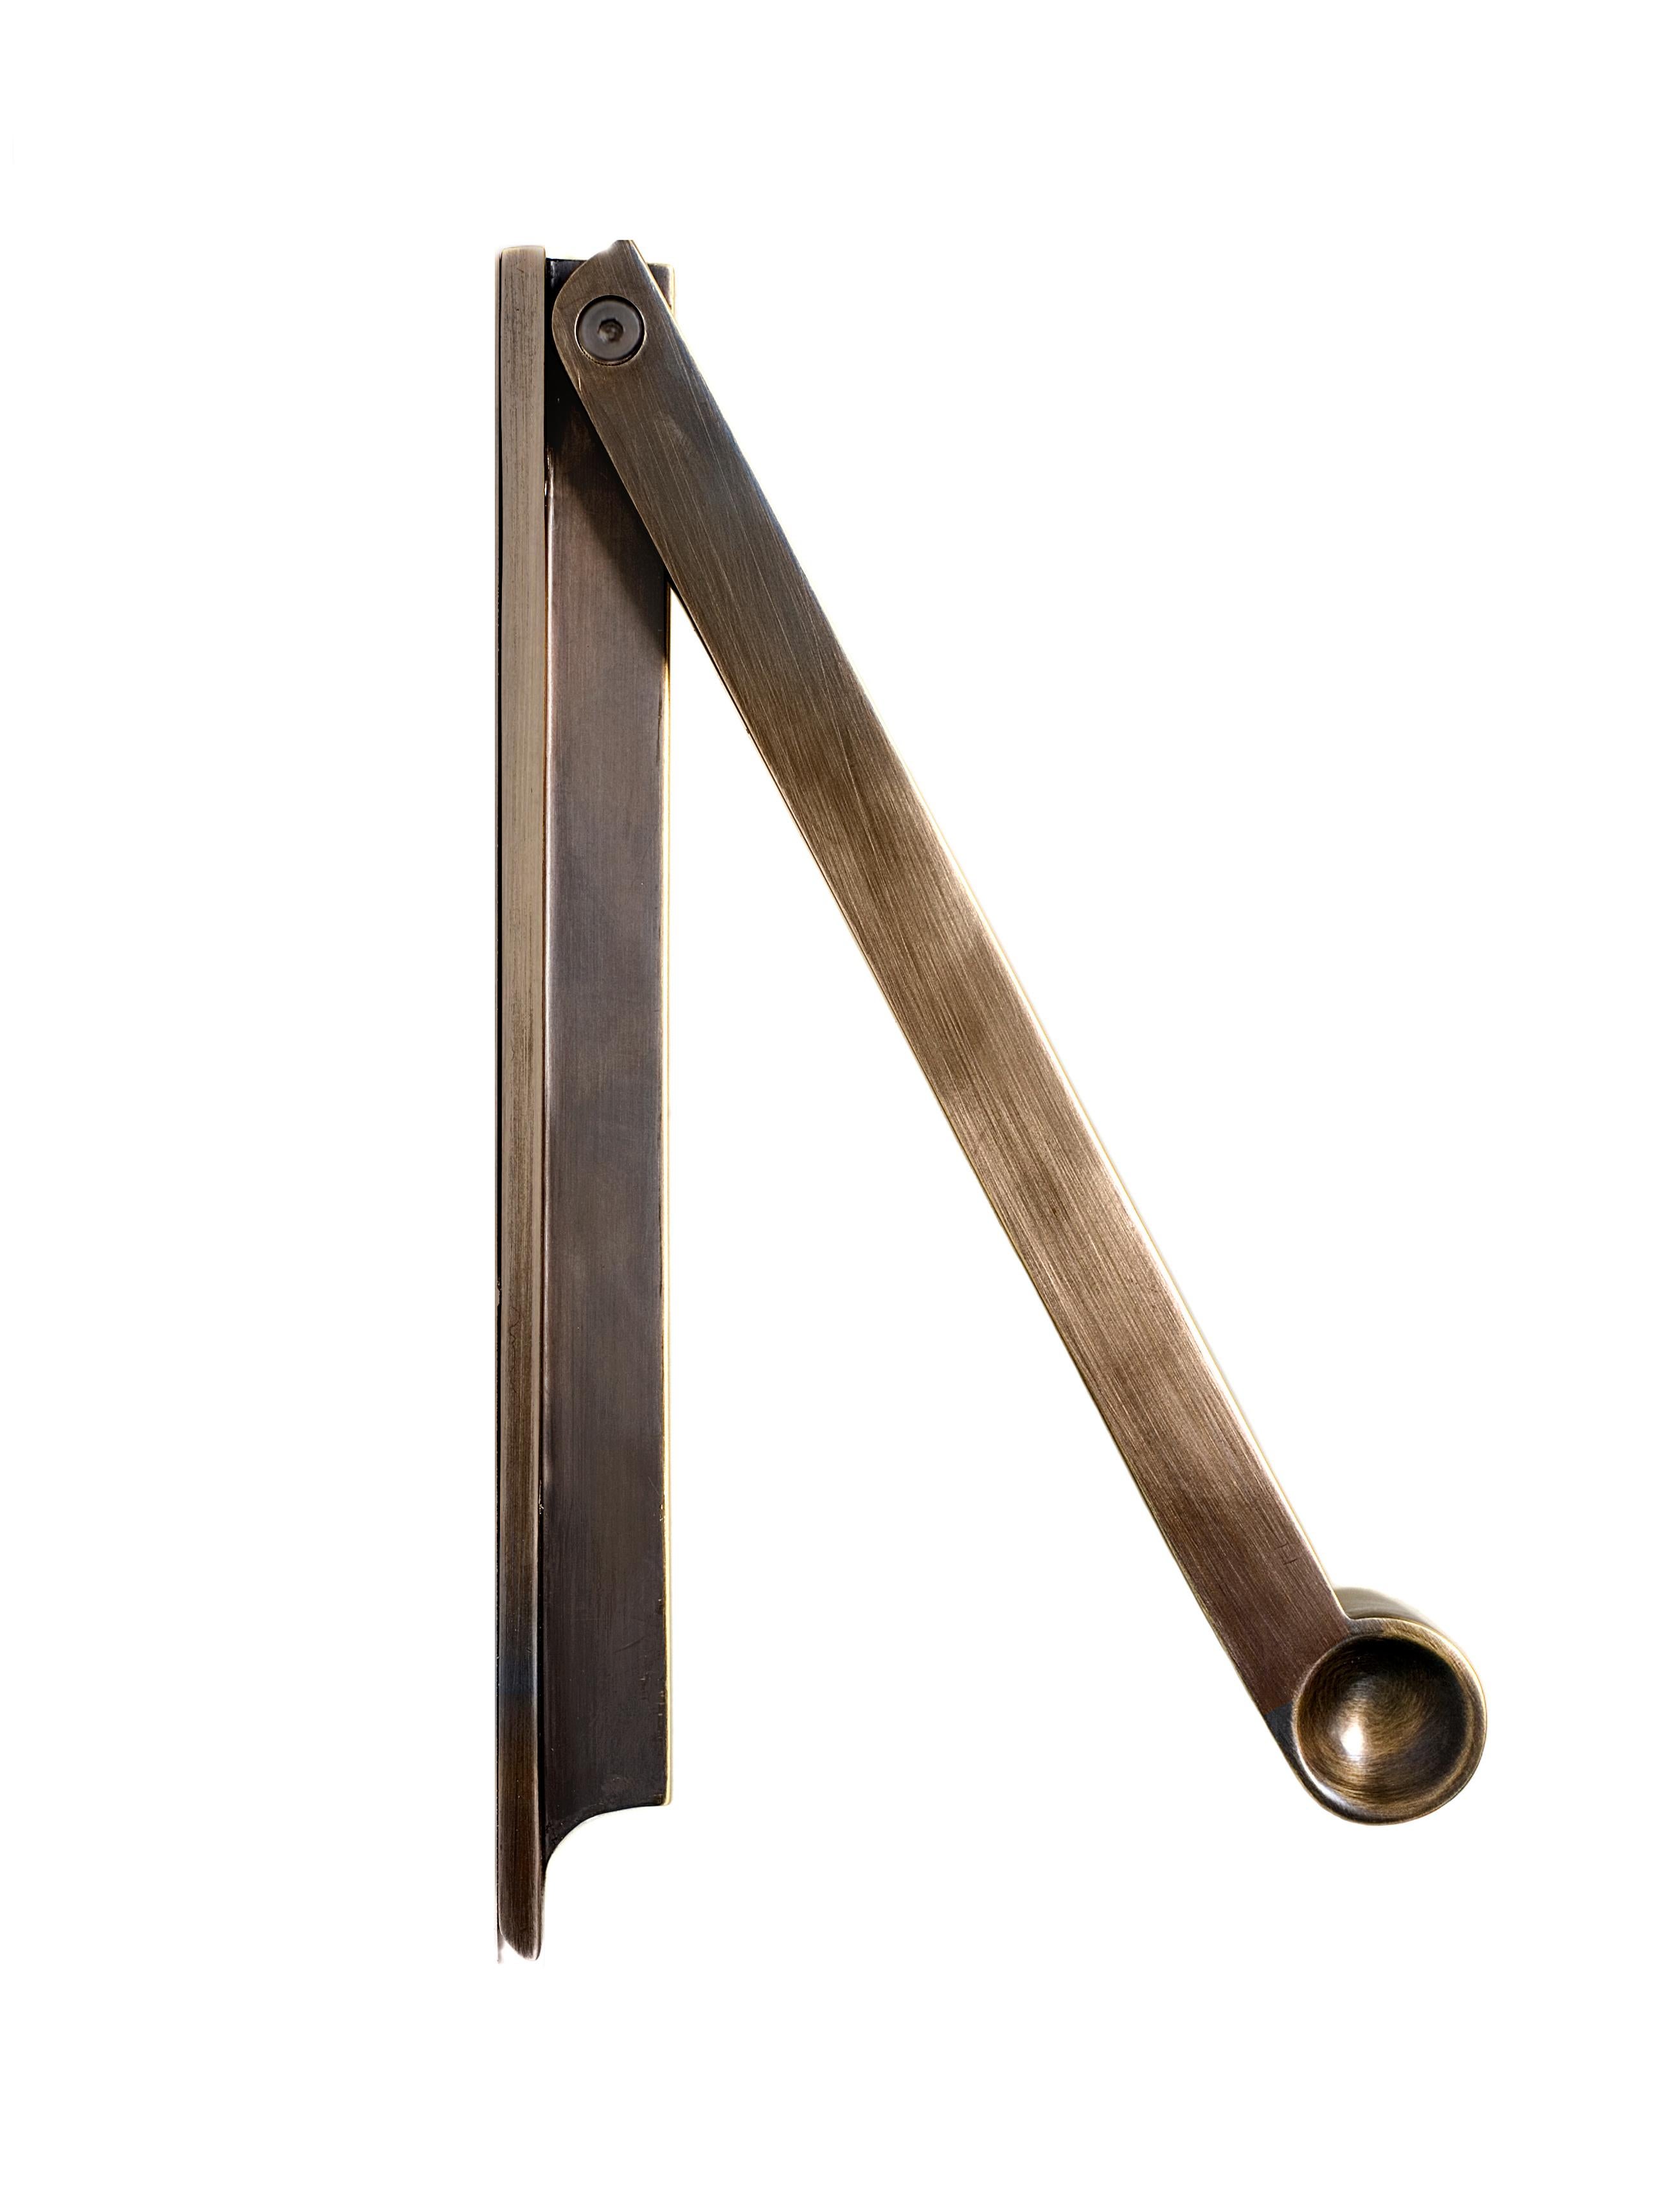 Pendulum Door Knocker in Premium Finishes In New Condition For Sale In Bondville, VT